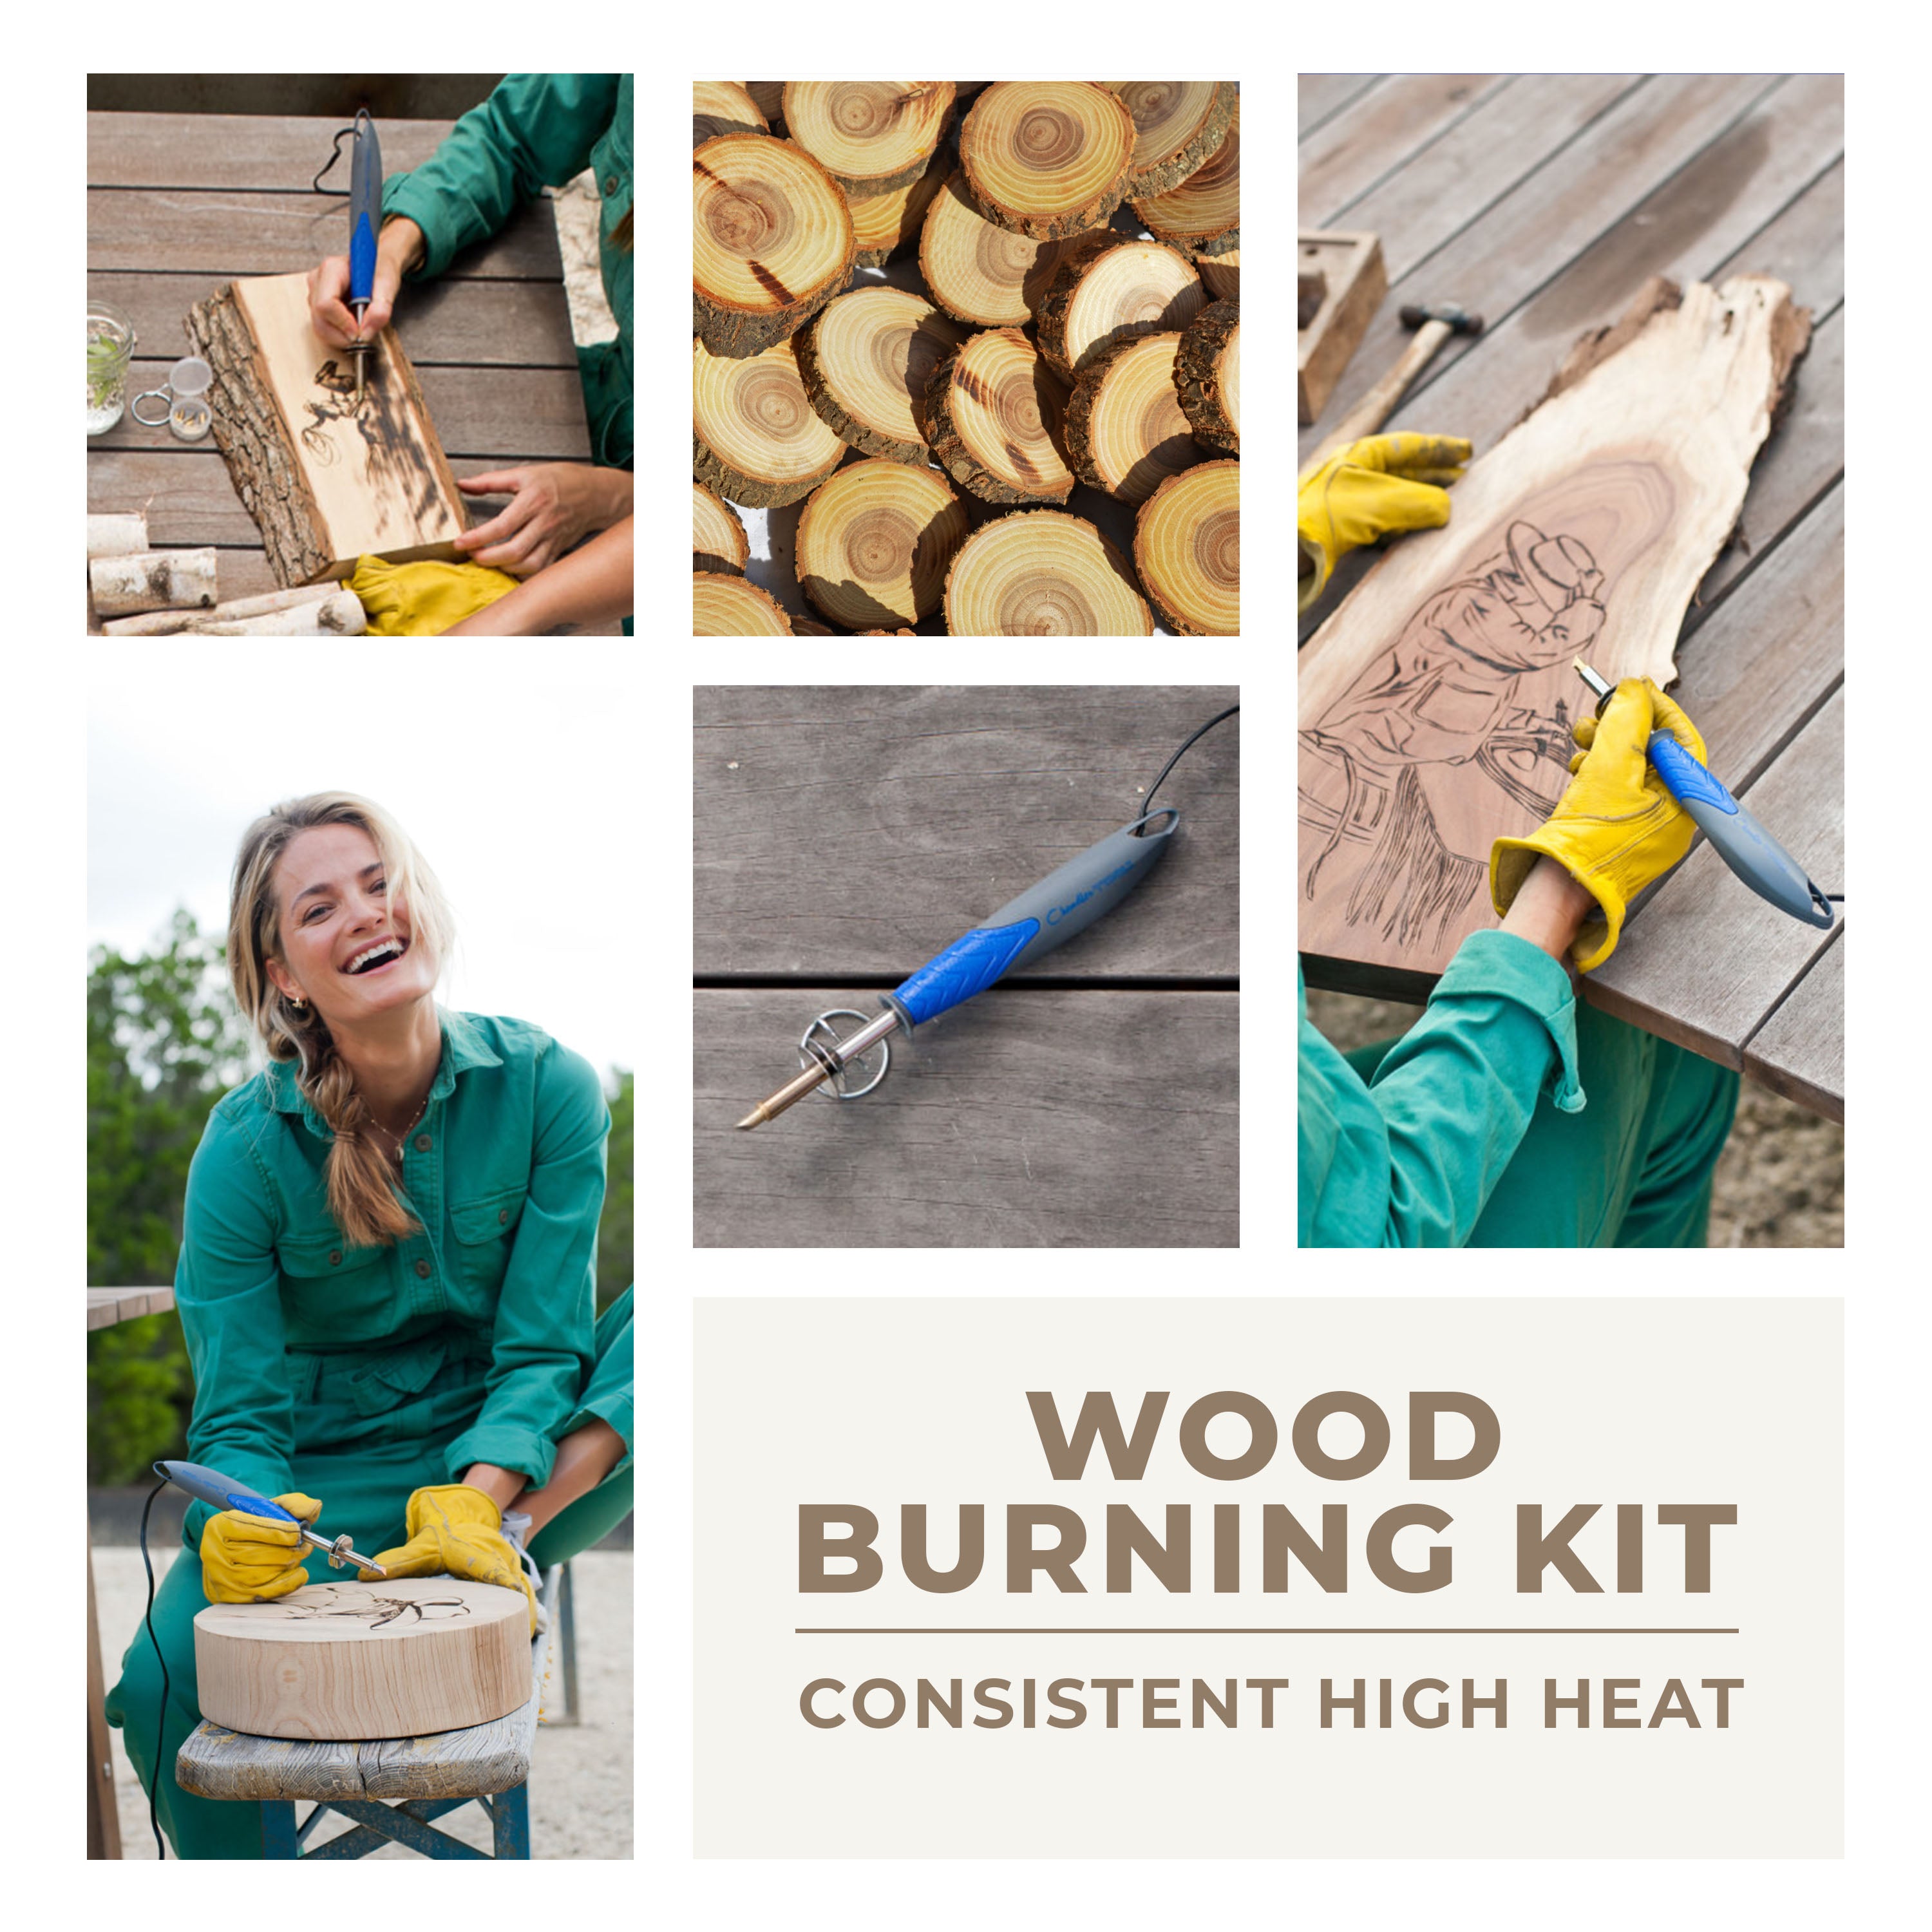  Wood Burning Kit,Wood Burning Tool,Wood Burner Tool